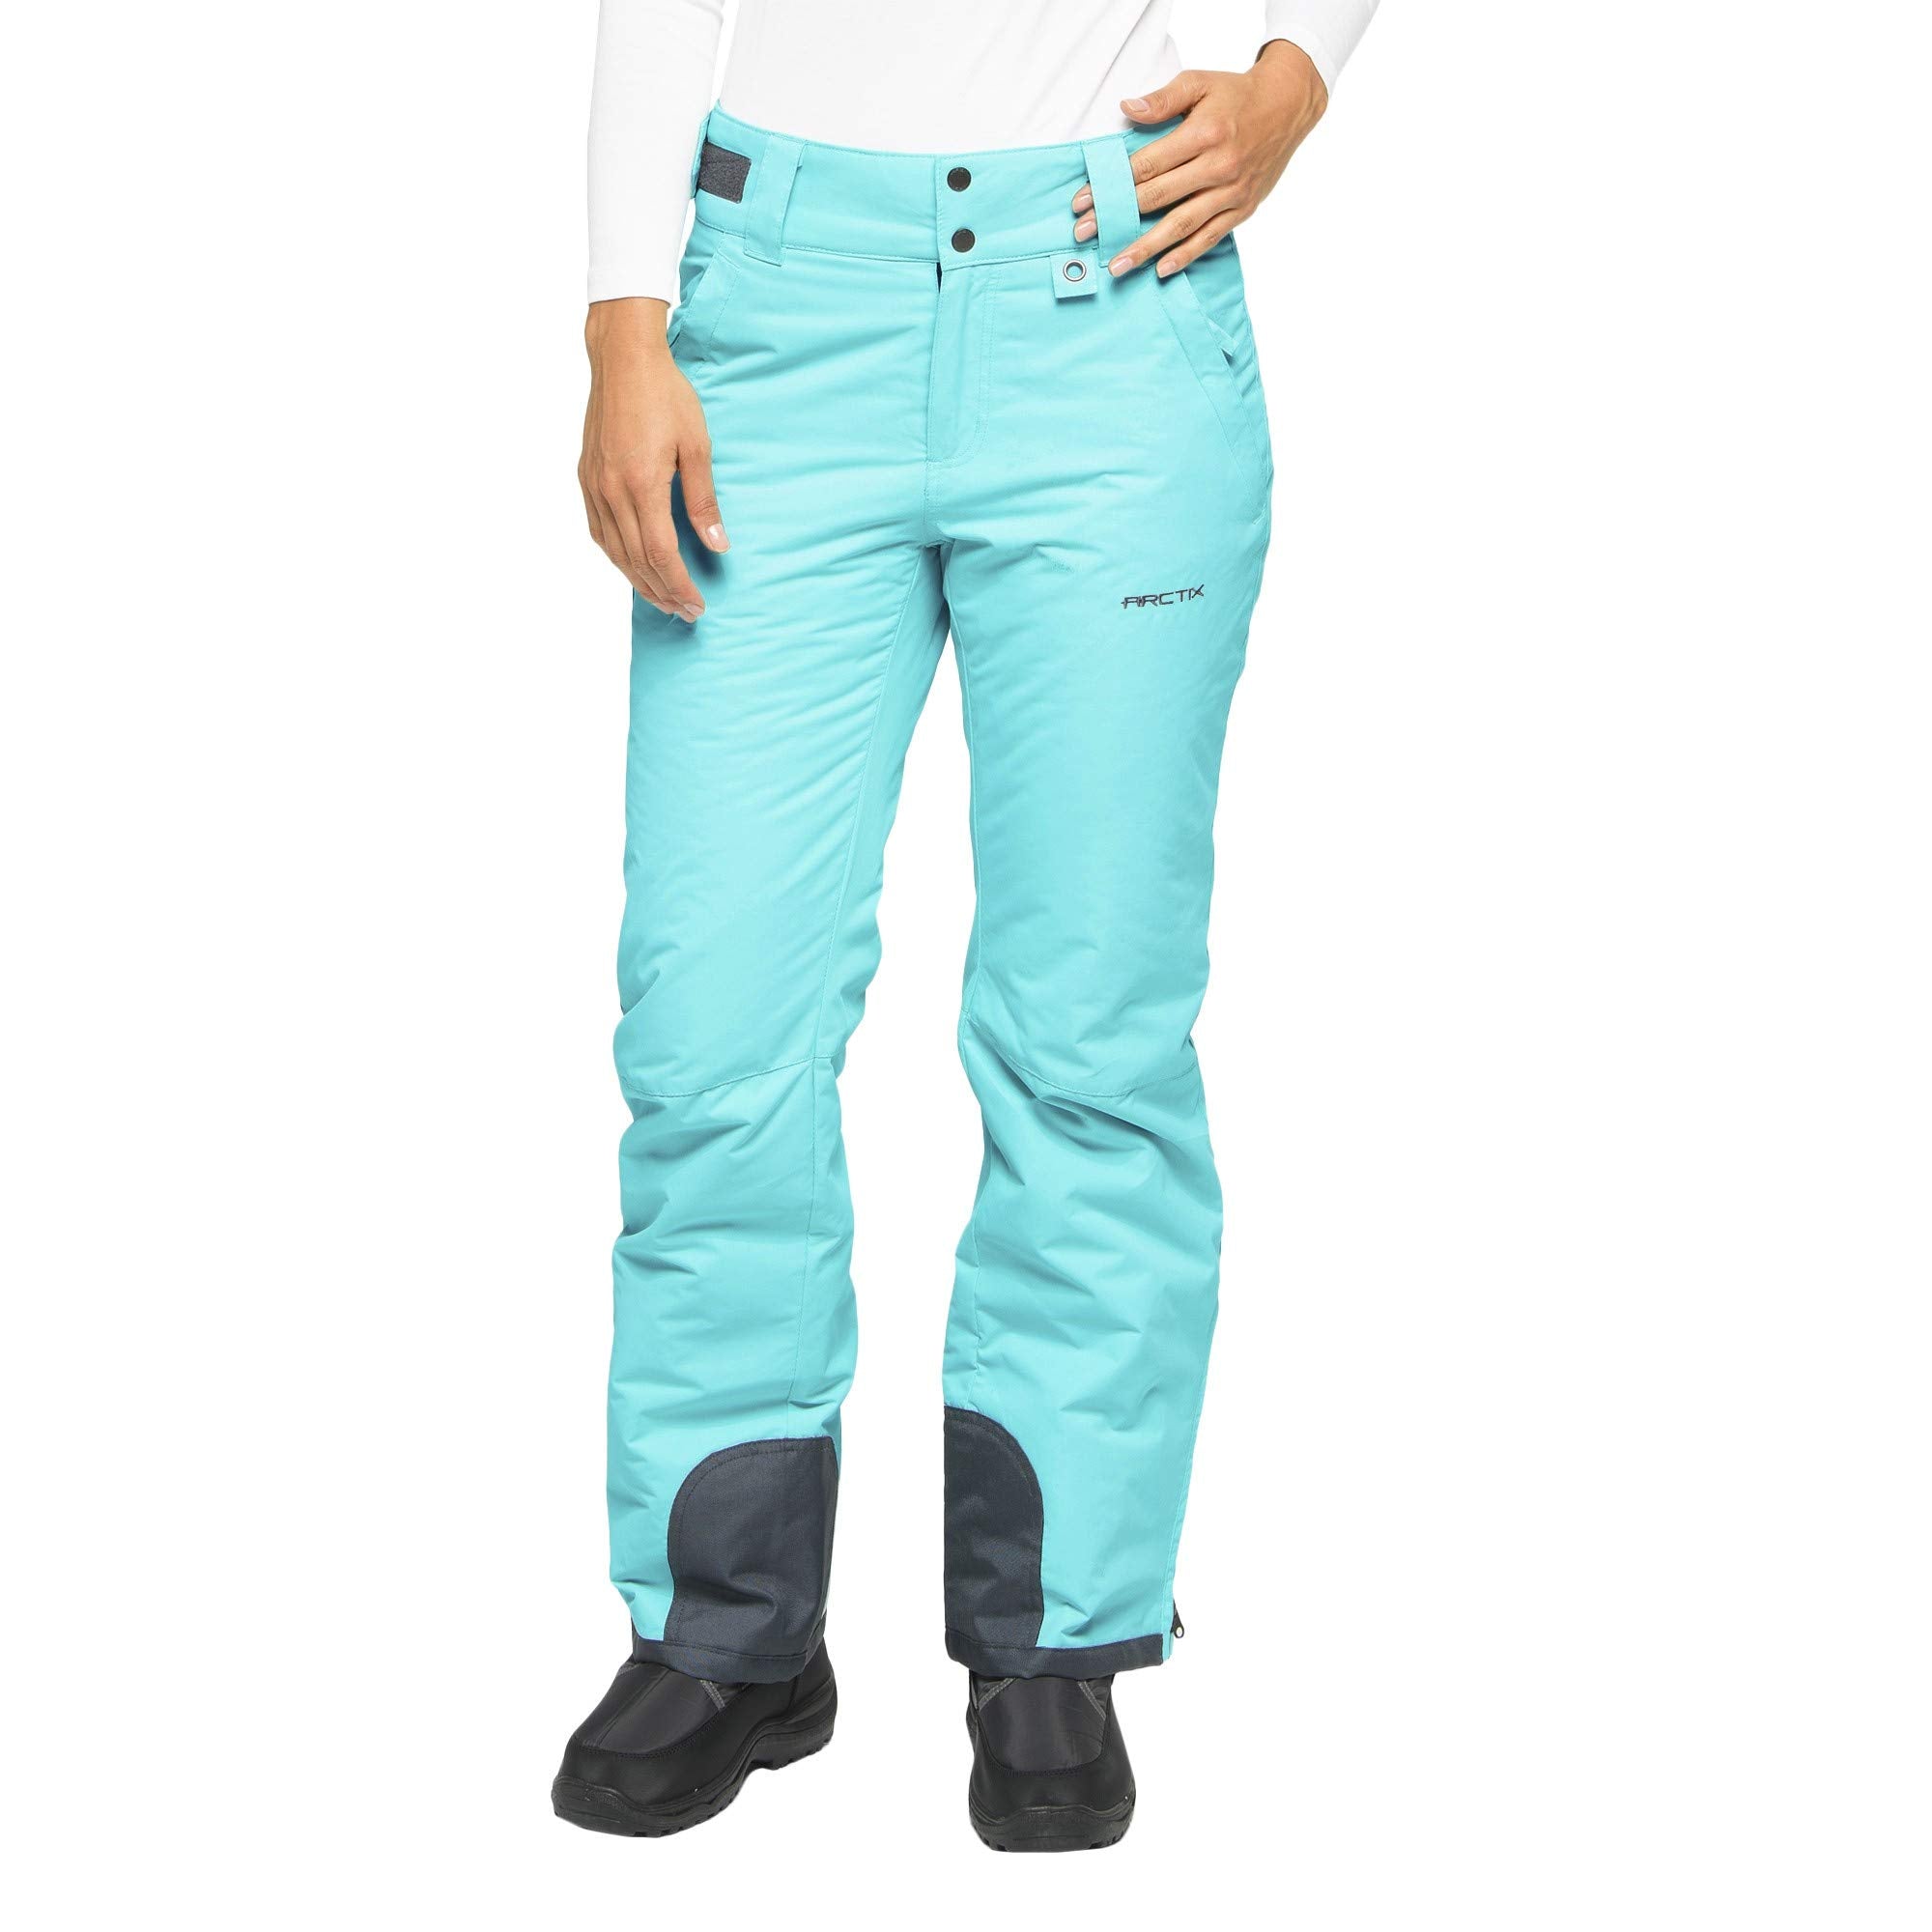 Arctix Women's Premium Insulated Snow Pants, Watercolor Blue